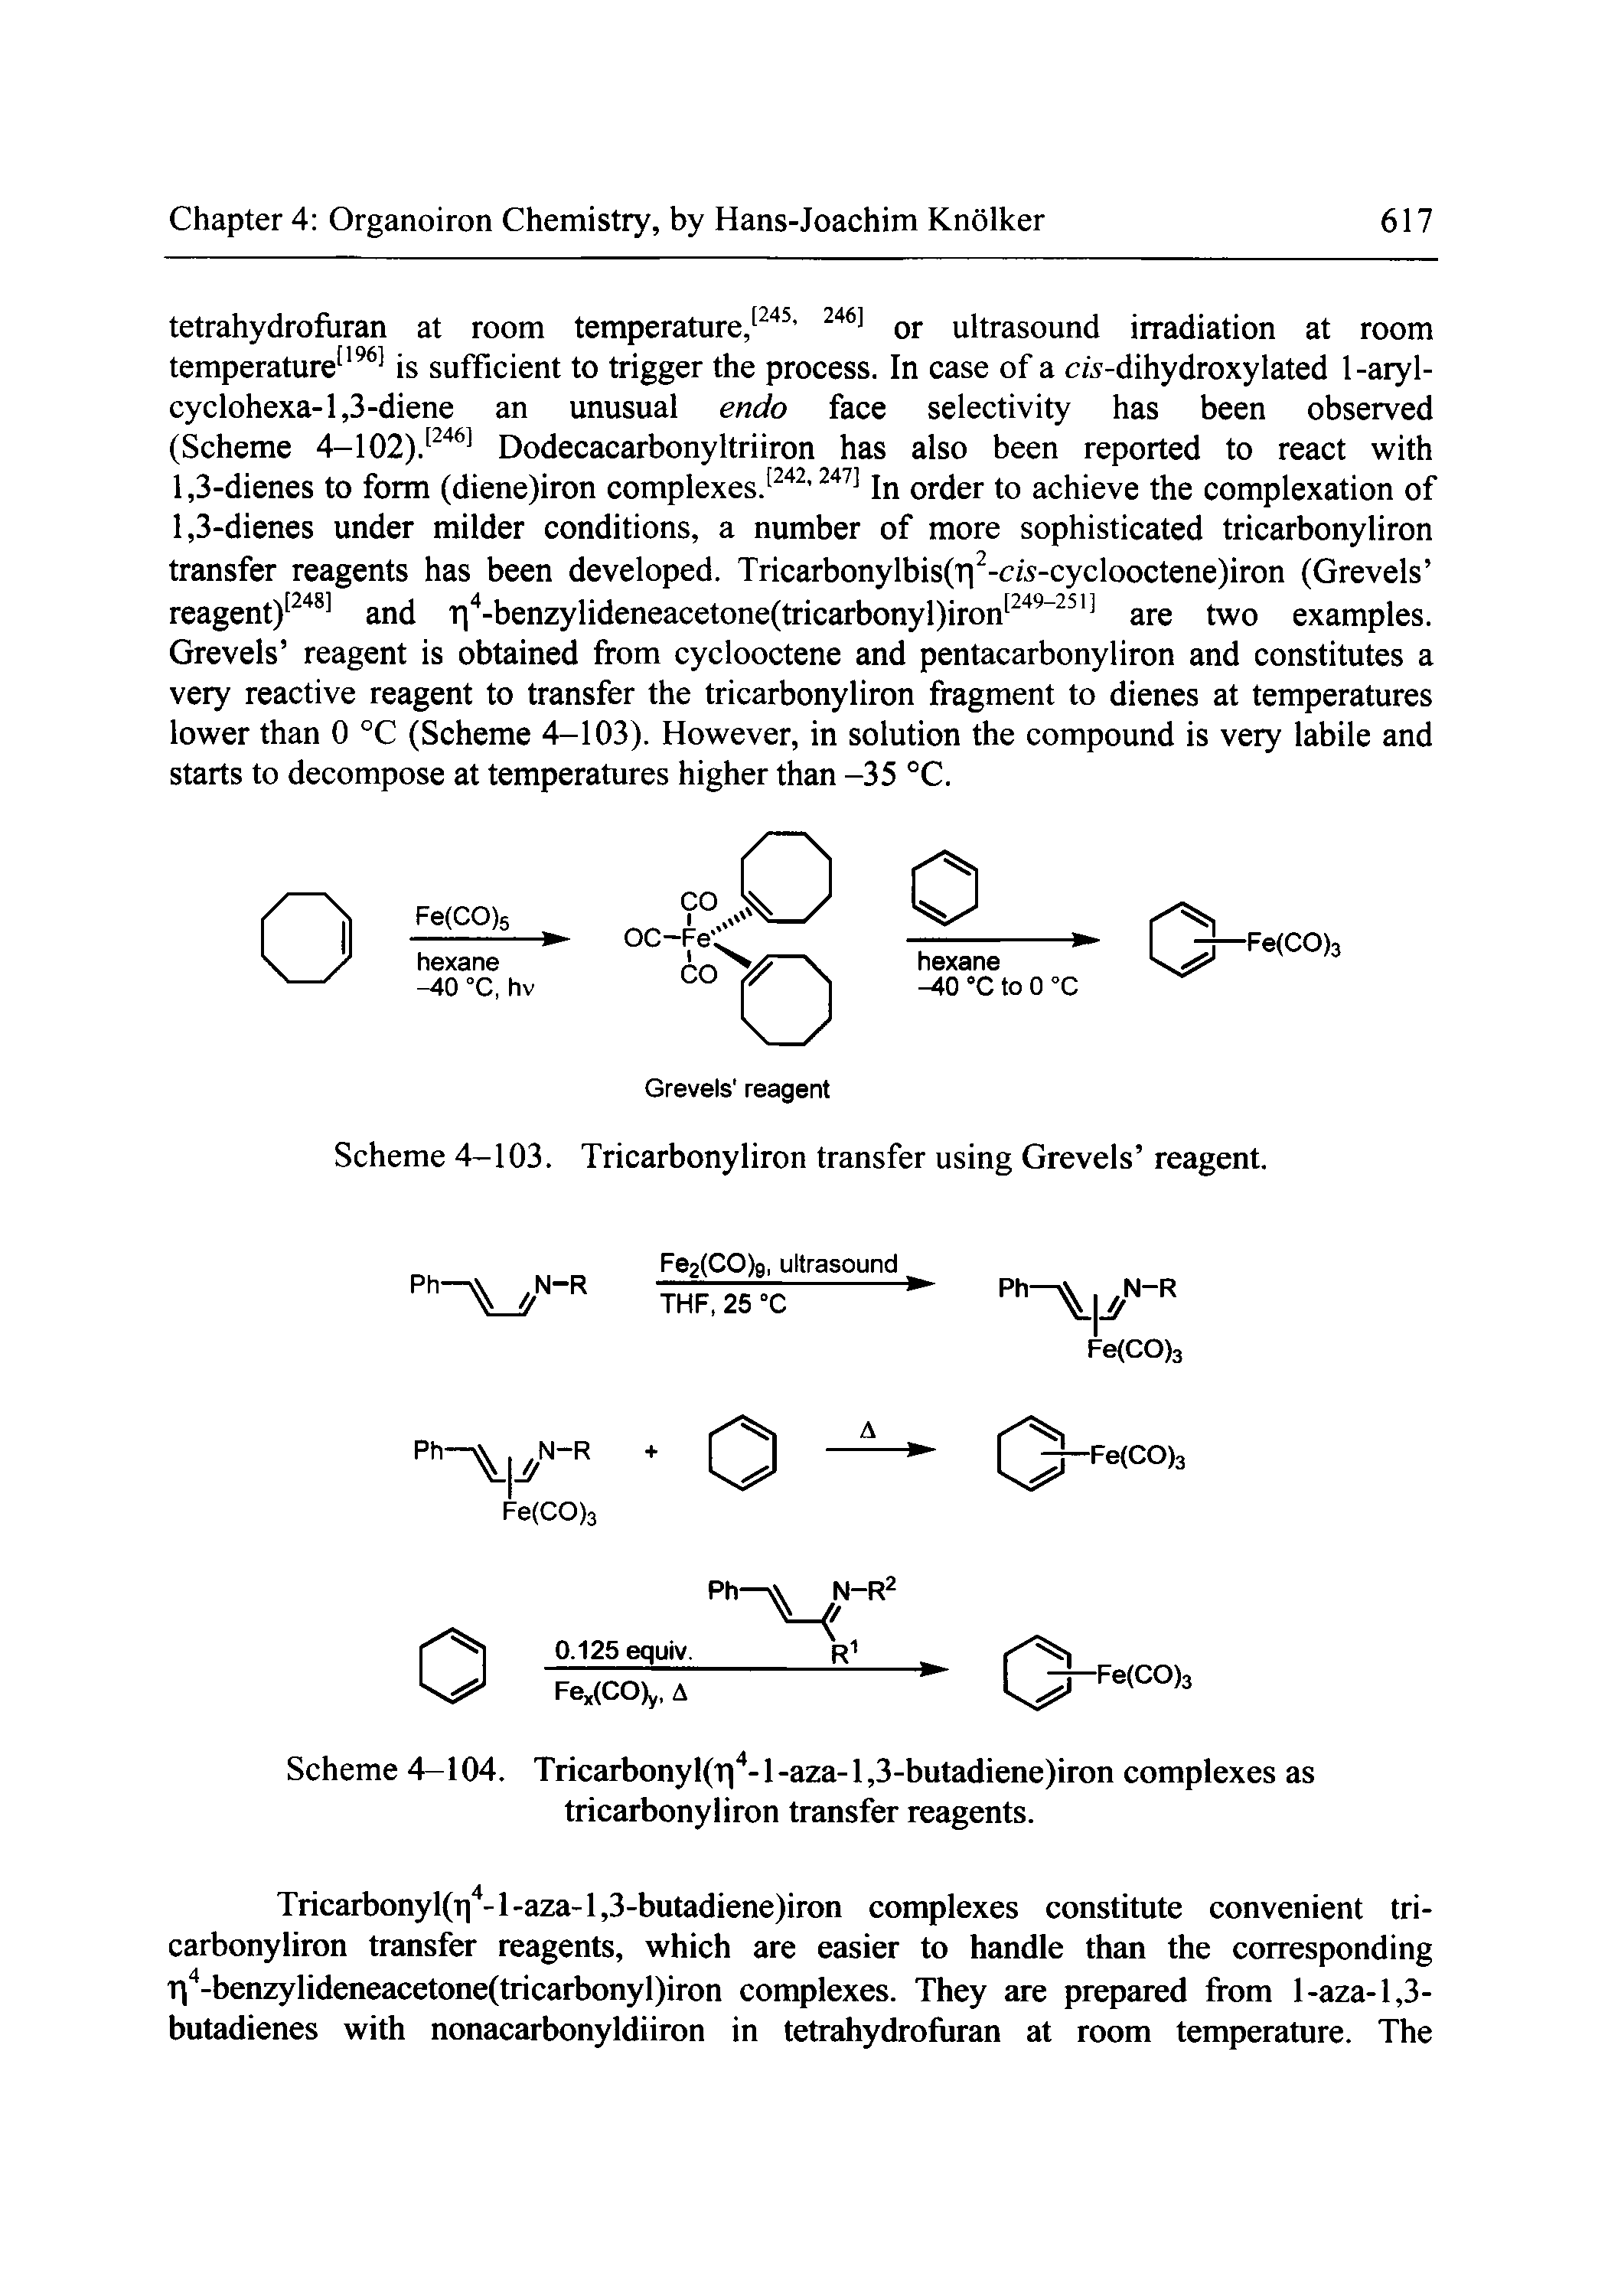 Scheme 4-104. Tricarbonyl(T -1 -aza-1,3-butadiene)iron complexes as tricarbonyliron transfer reagents.